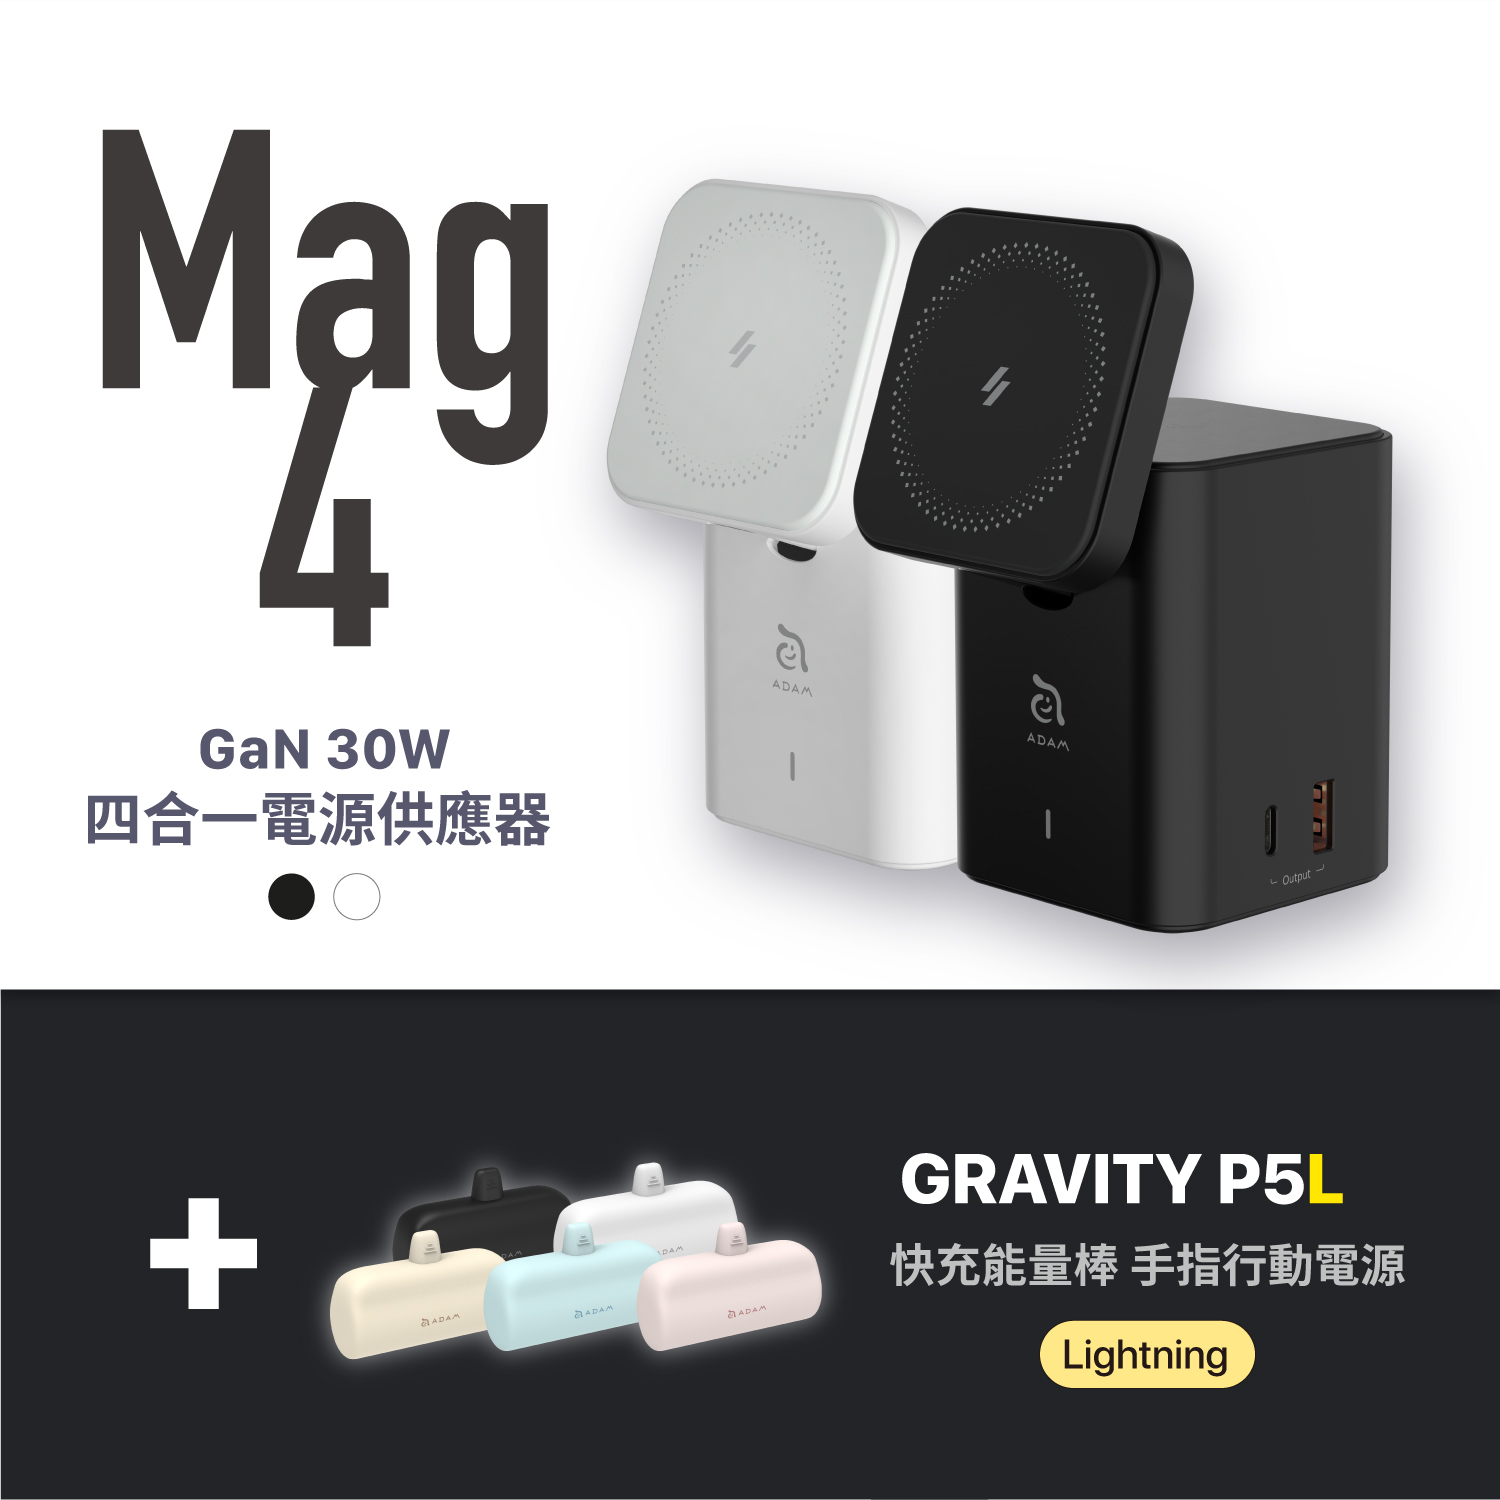 Mag 4 GaN 30W 四合一電源供應器_GRAVITY P5L Lightning 口袋型行動電源